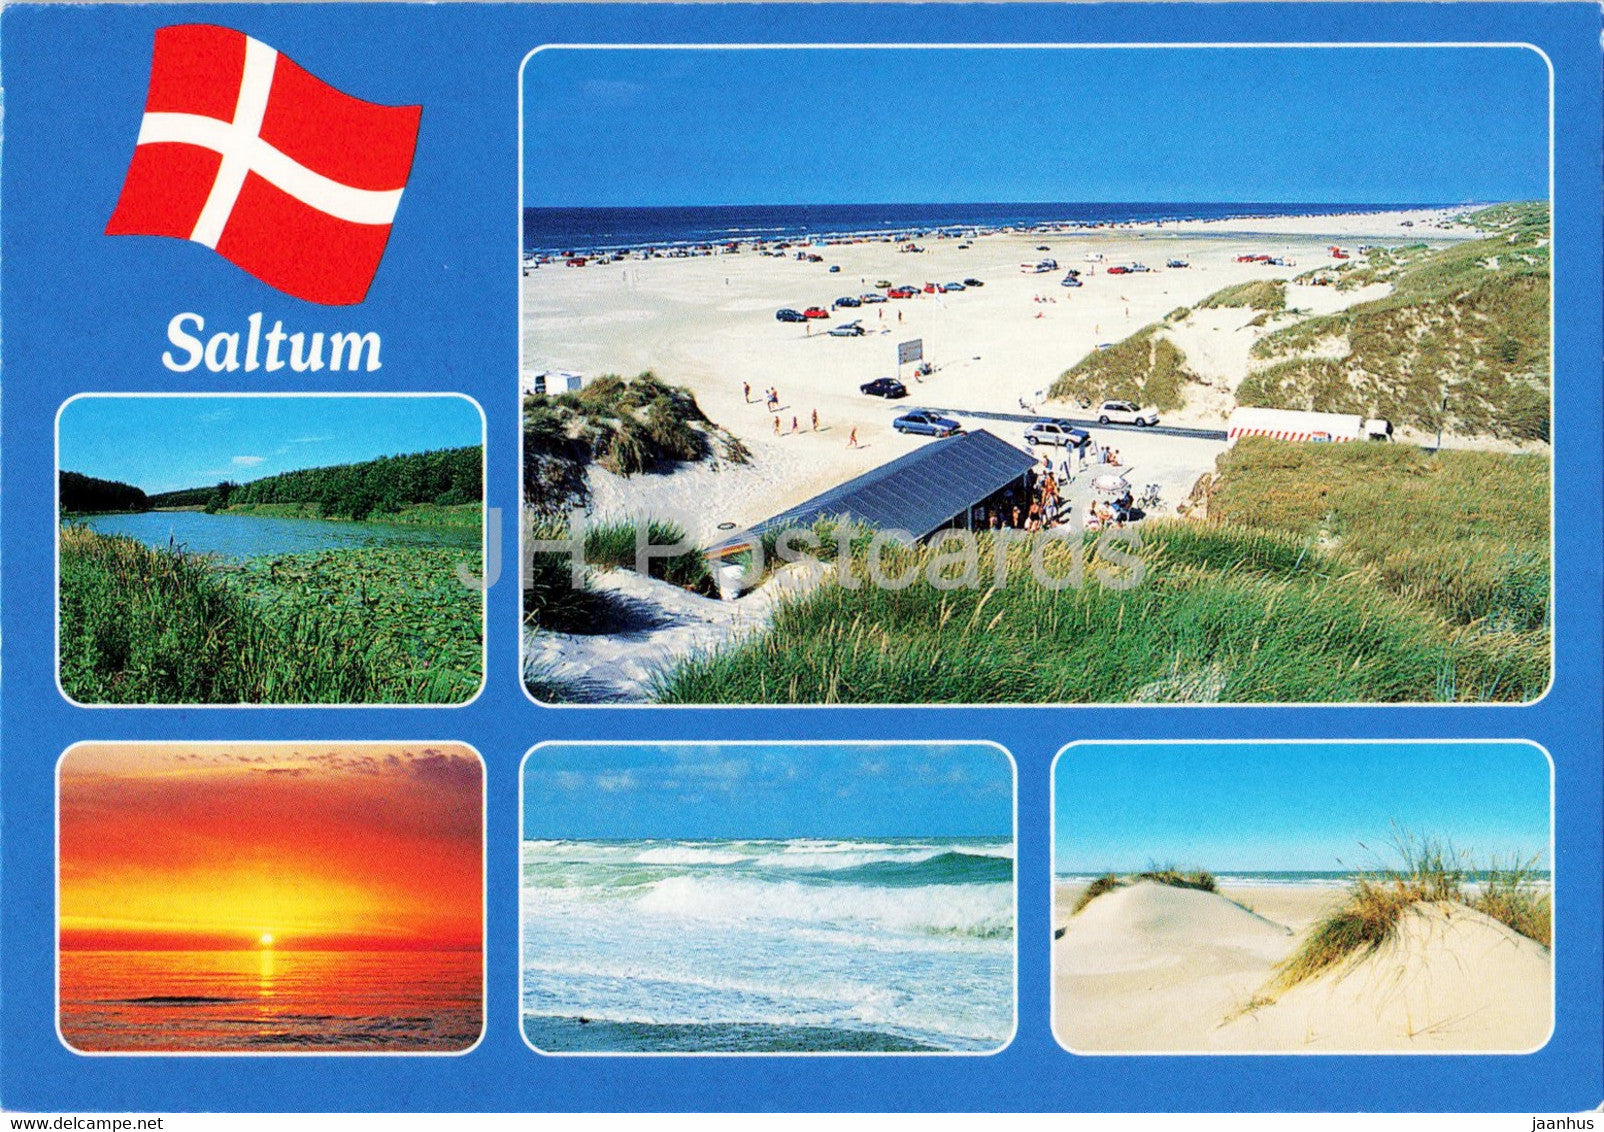 Saltum - sea - beach - multiview - 1998 - Denmark - used - JH Postcards